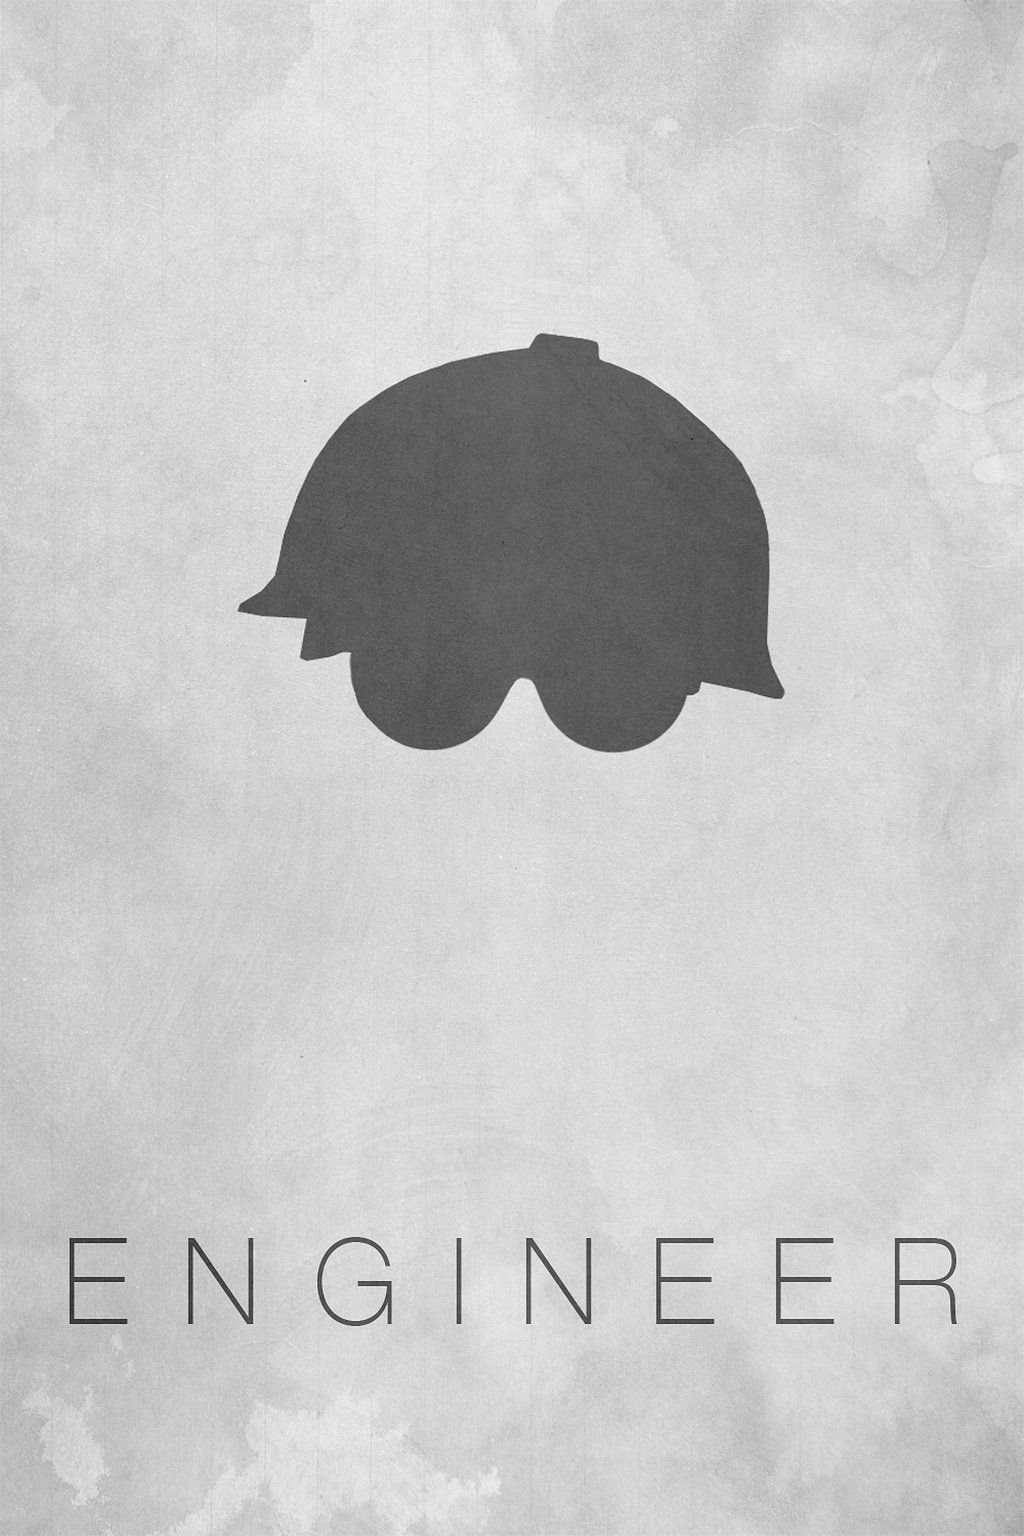 Engineering iPhone Wallpaper Free Engineering iPhone Background